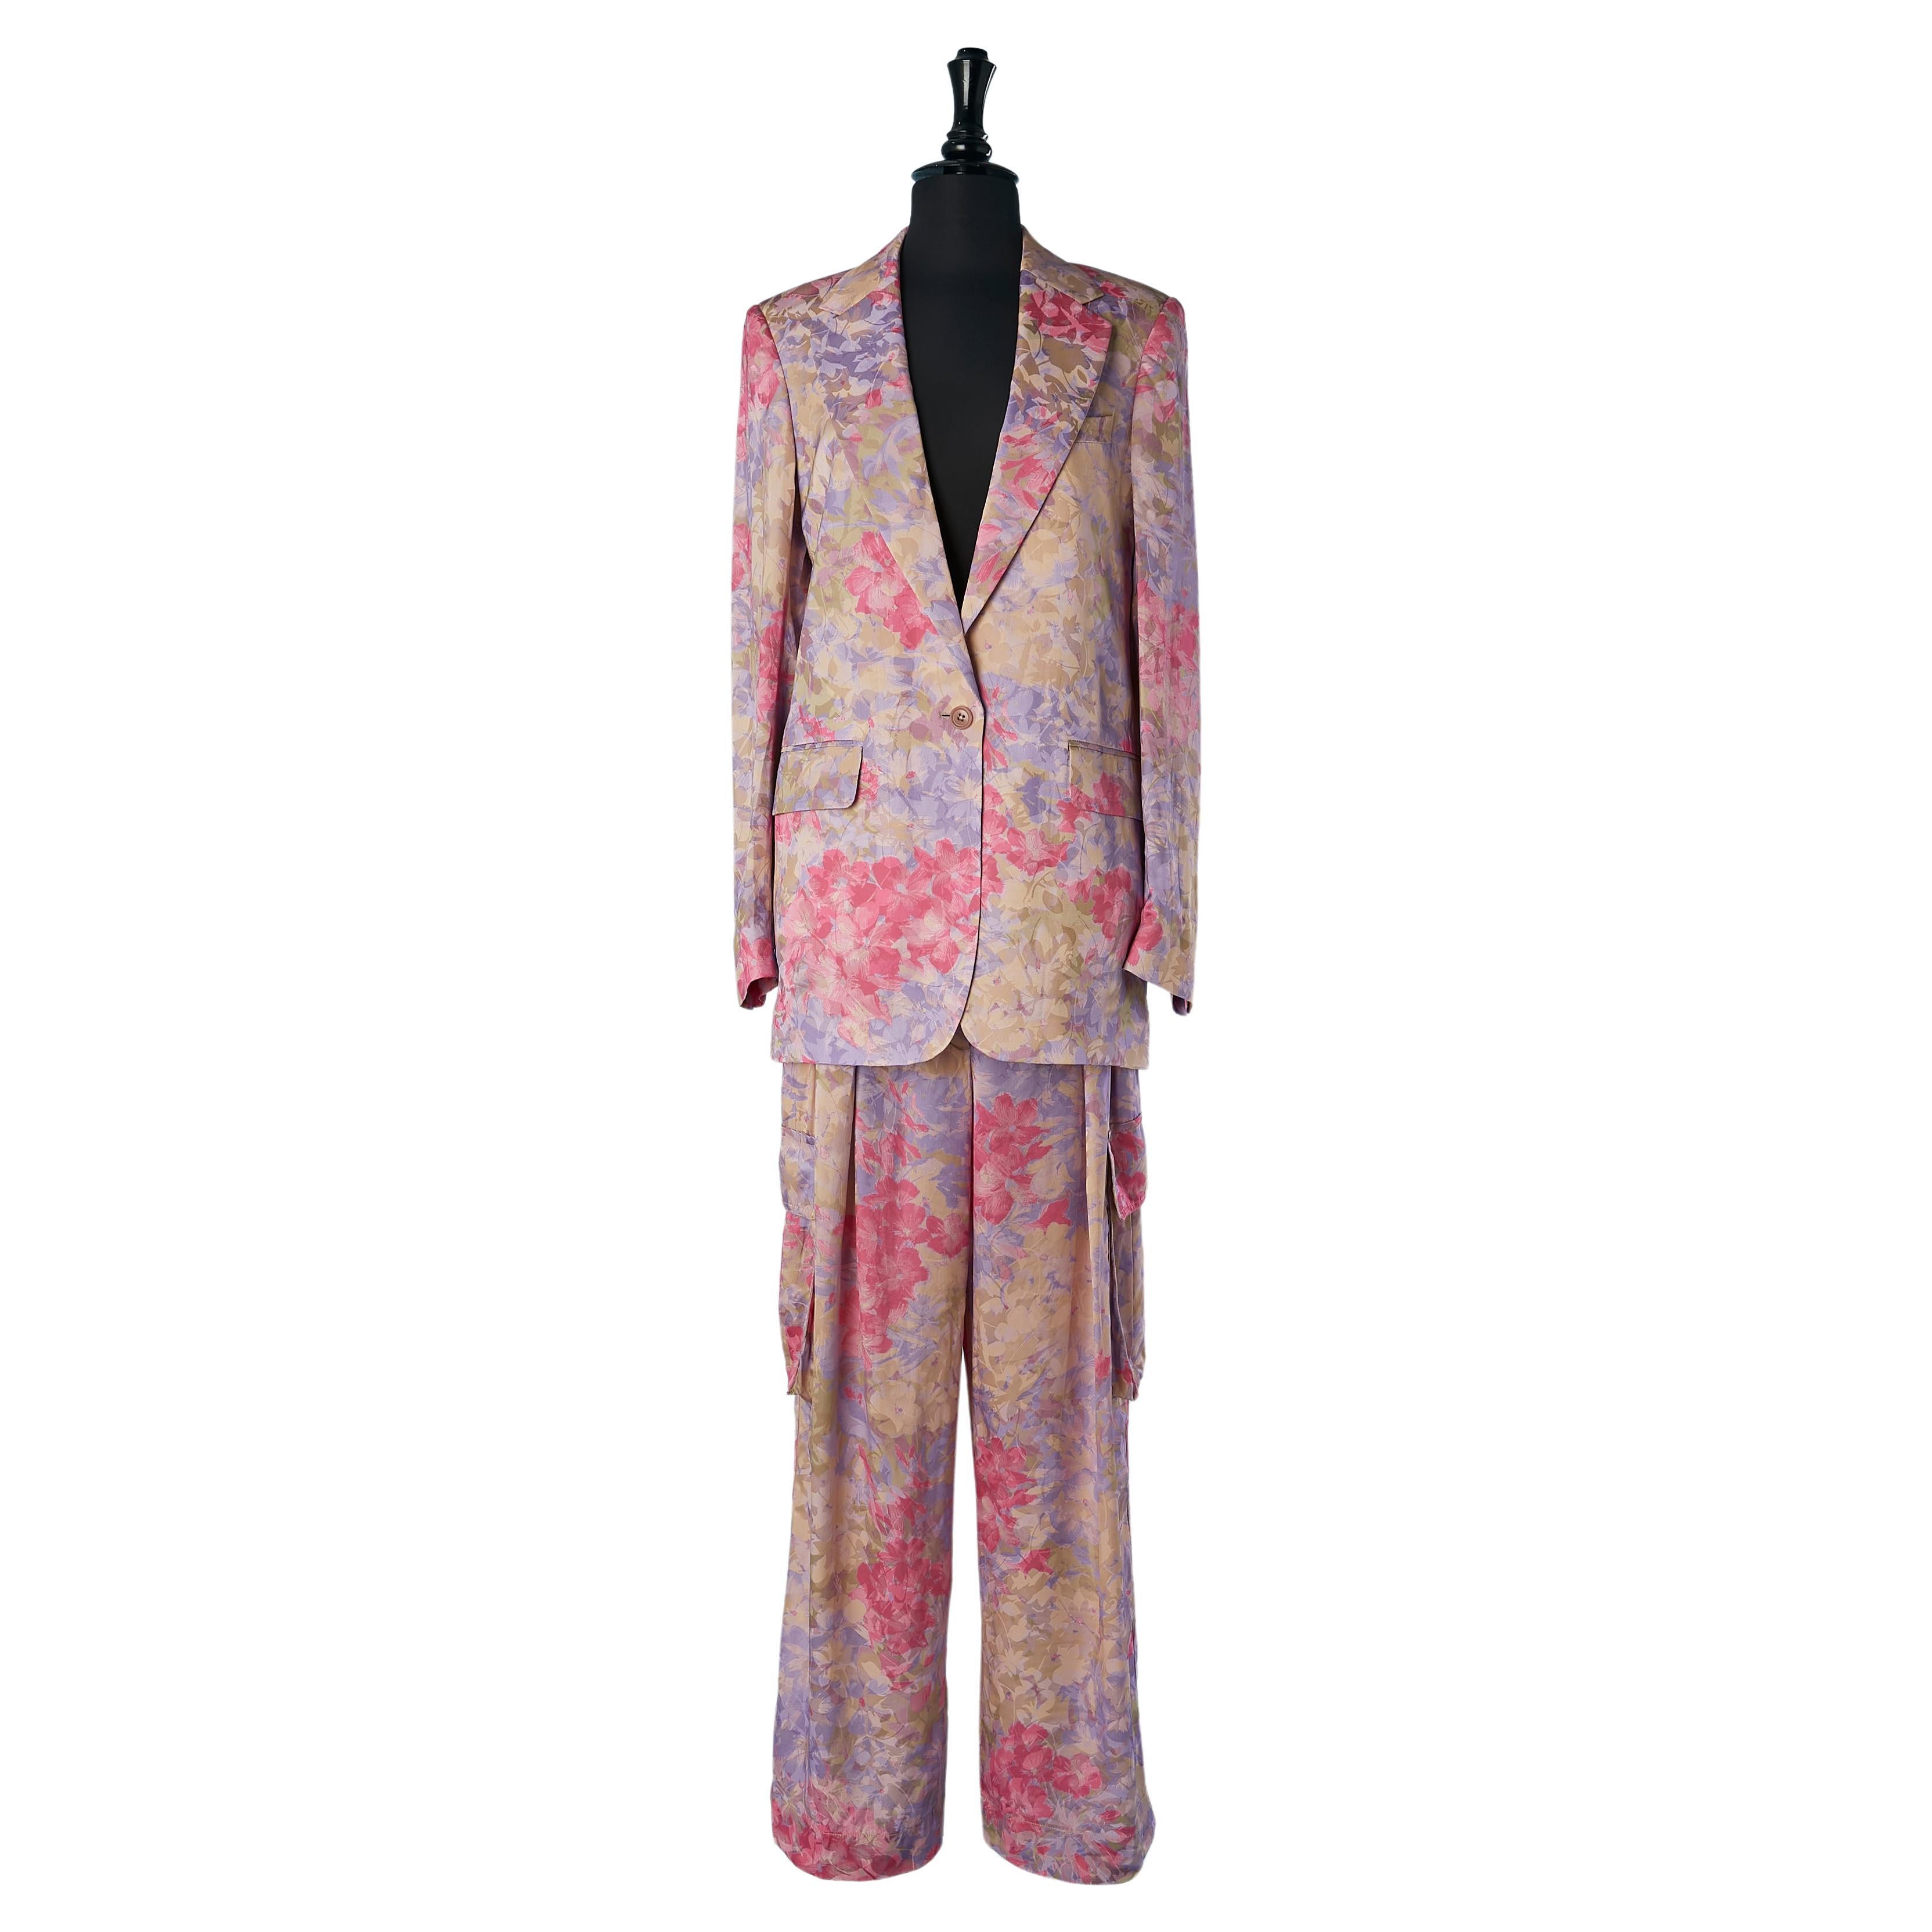 Trouser suit in flower jacquard pattern Dries Van Noten  For Sale